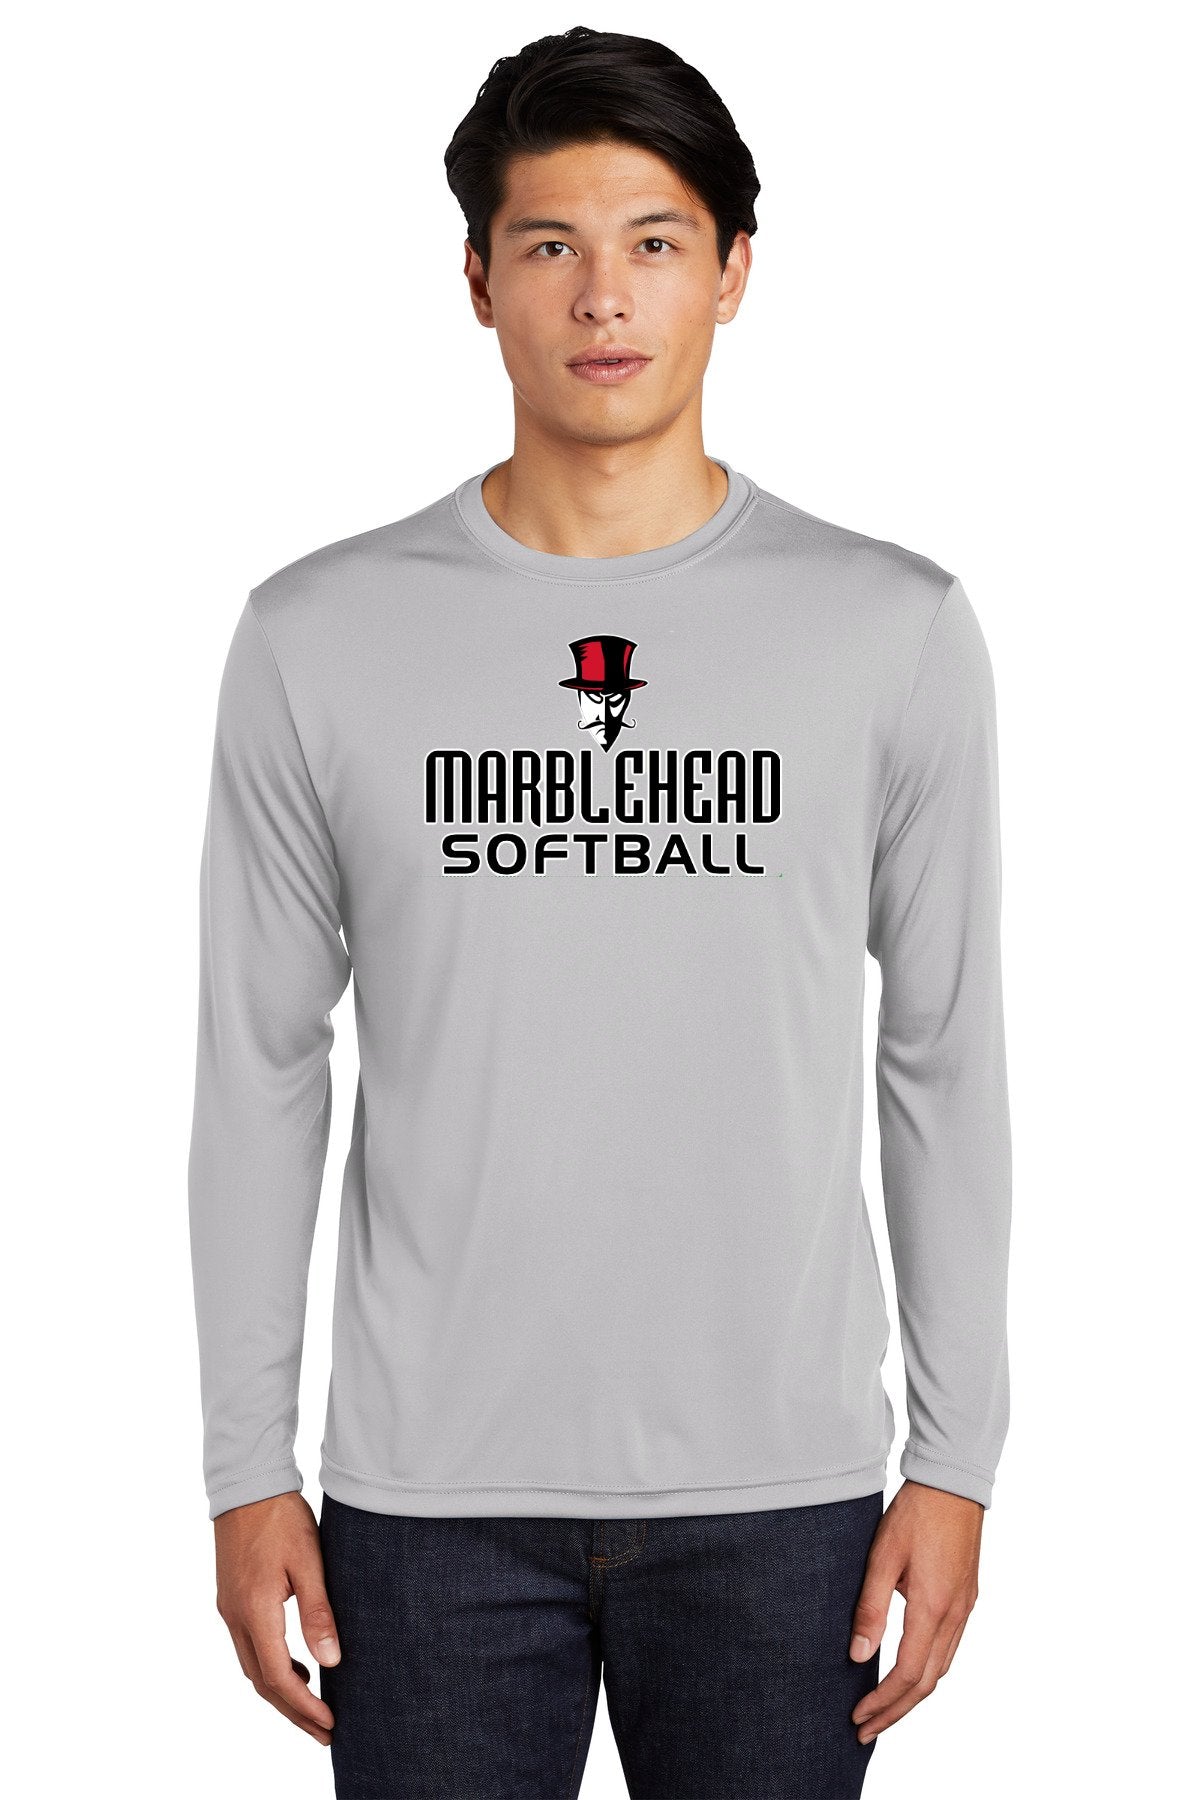 Marblehead Softball Little League Performance Shirt